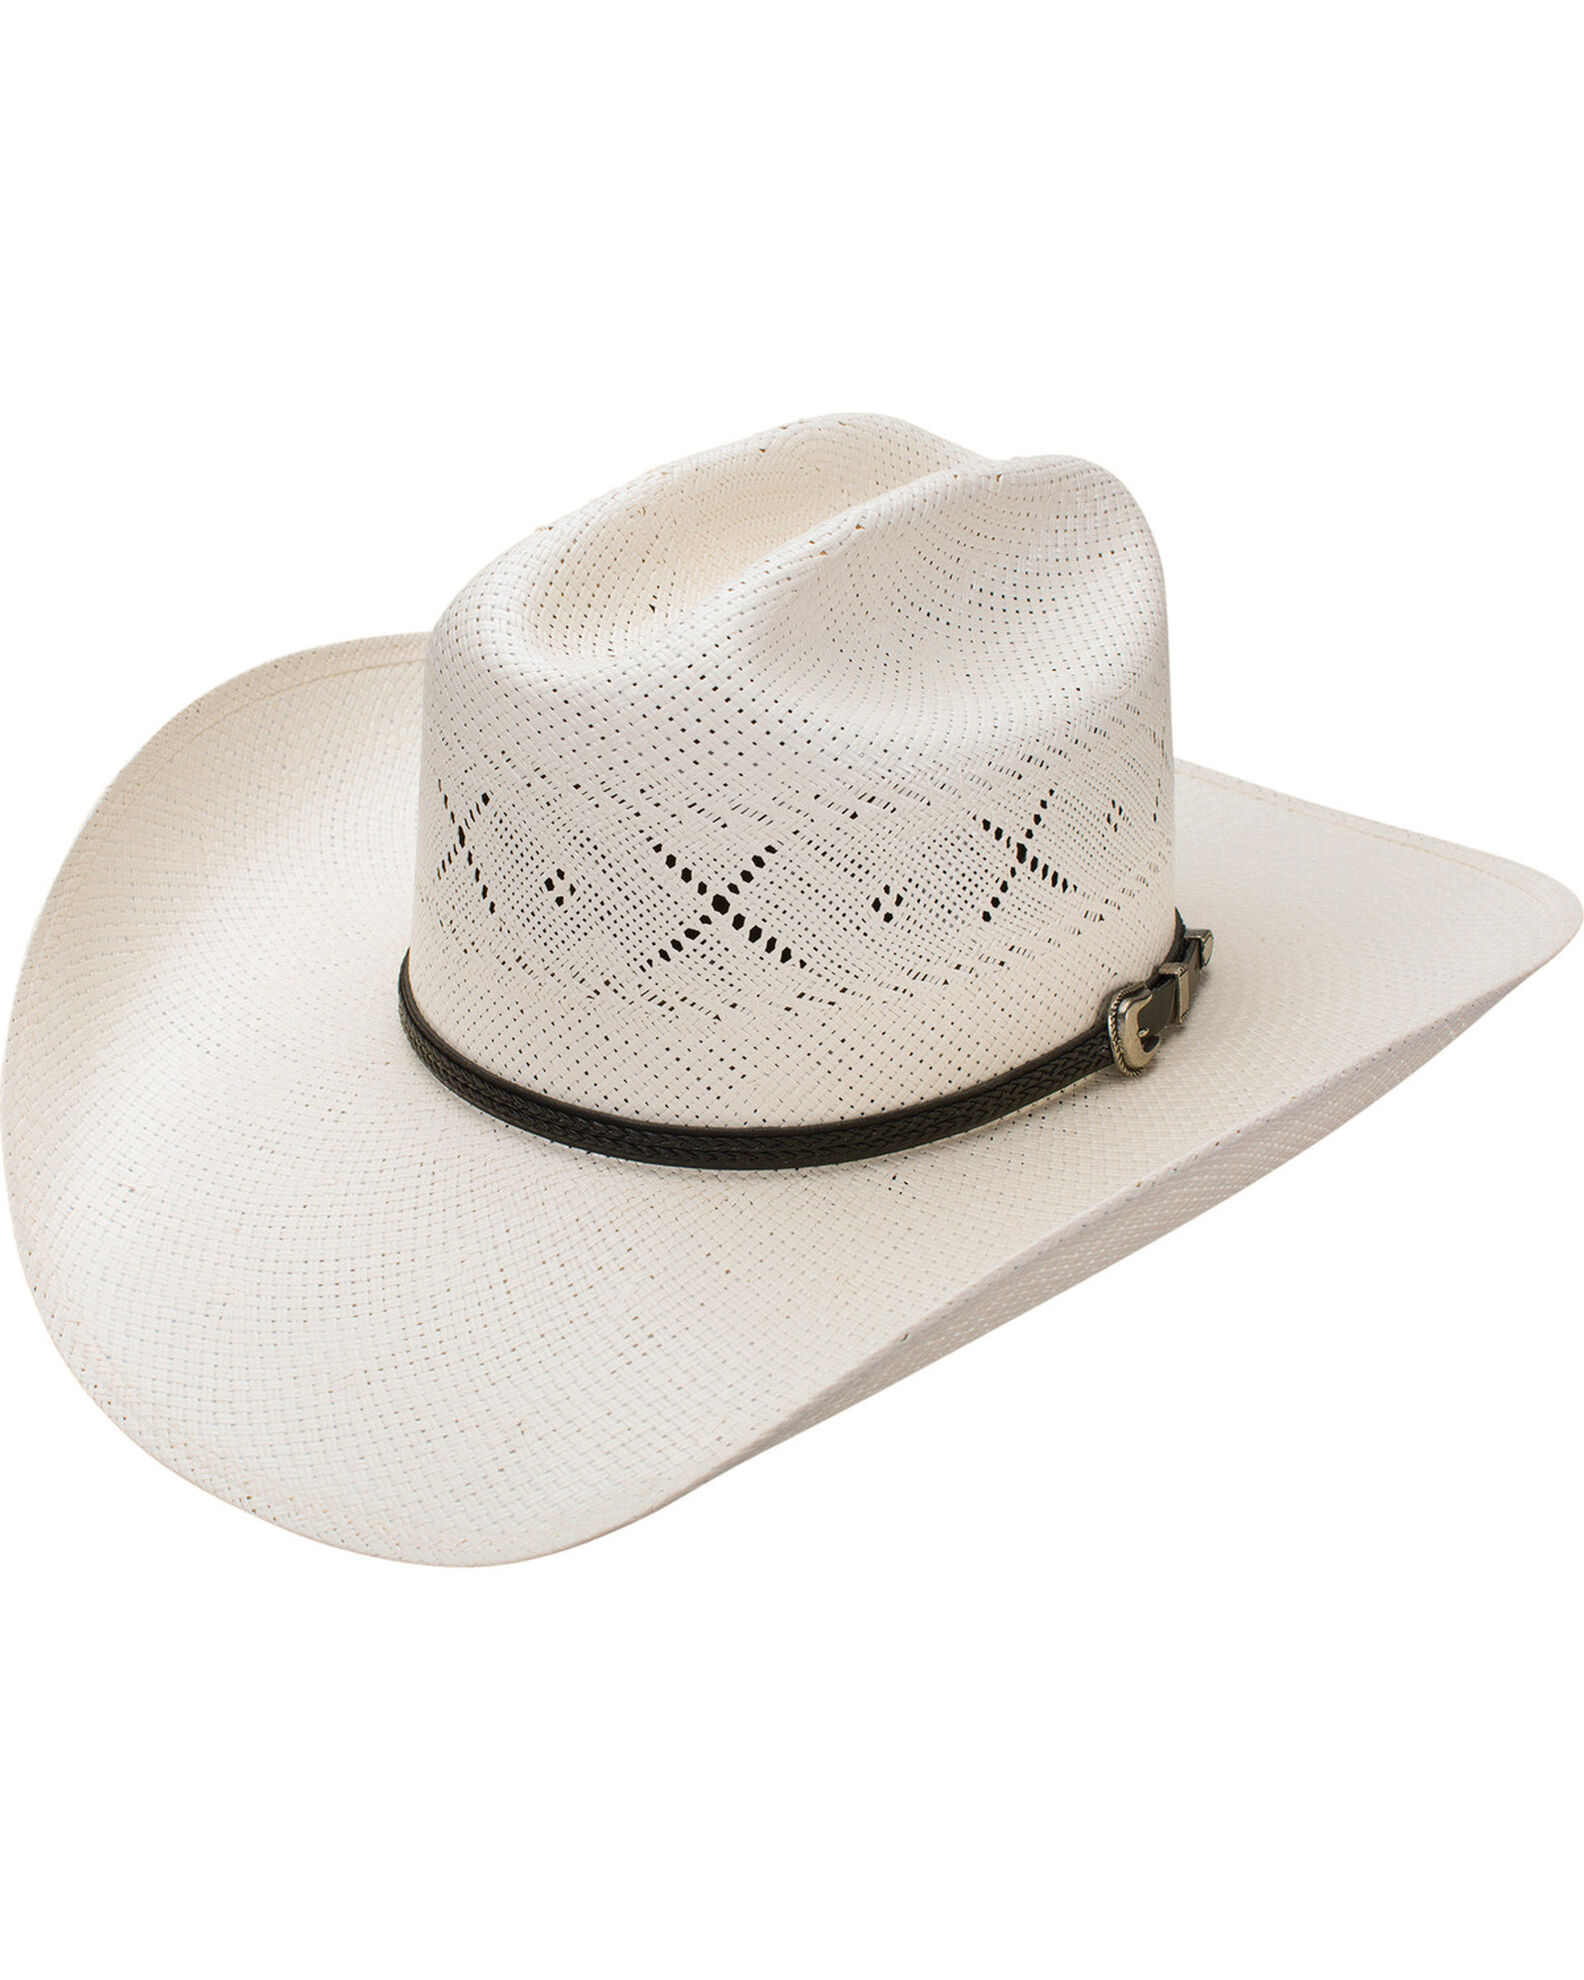 Resistol Cowboy Hat Box : Lot 2030